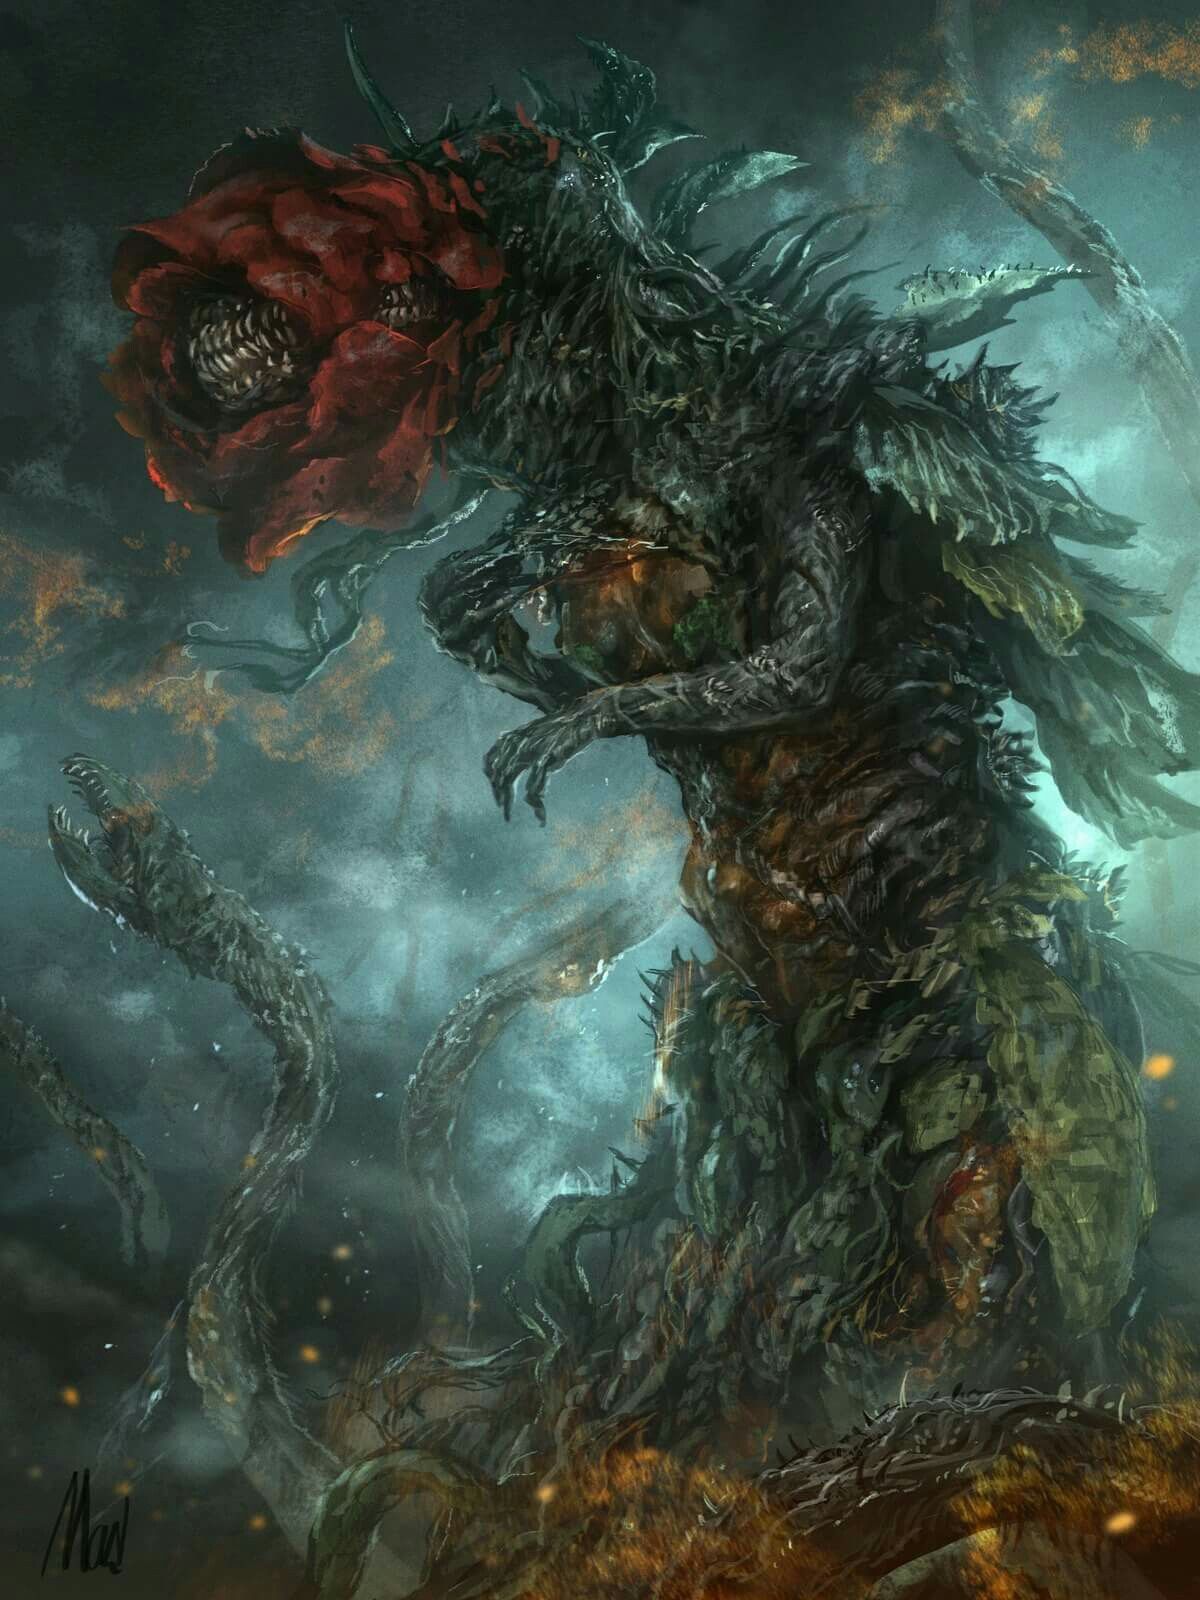 Free download BadAss Biollante fan art in 2019 Godzilla Fantasy